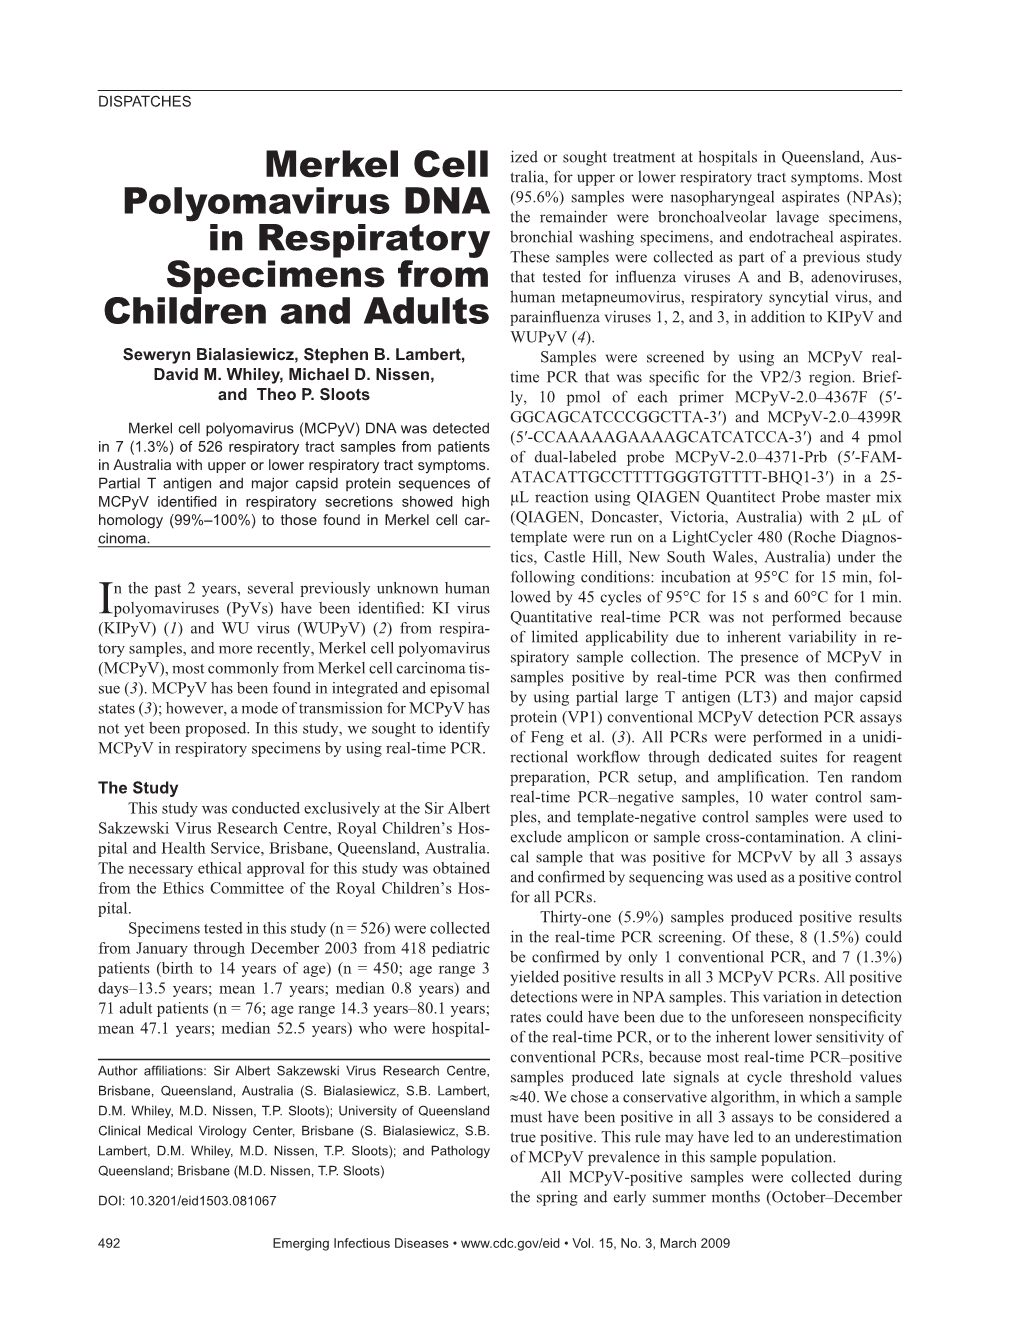 Merkel Cell Polyomavirus DNA in Respiratory Specimens From